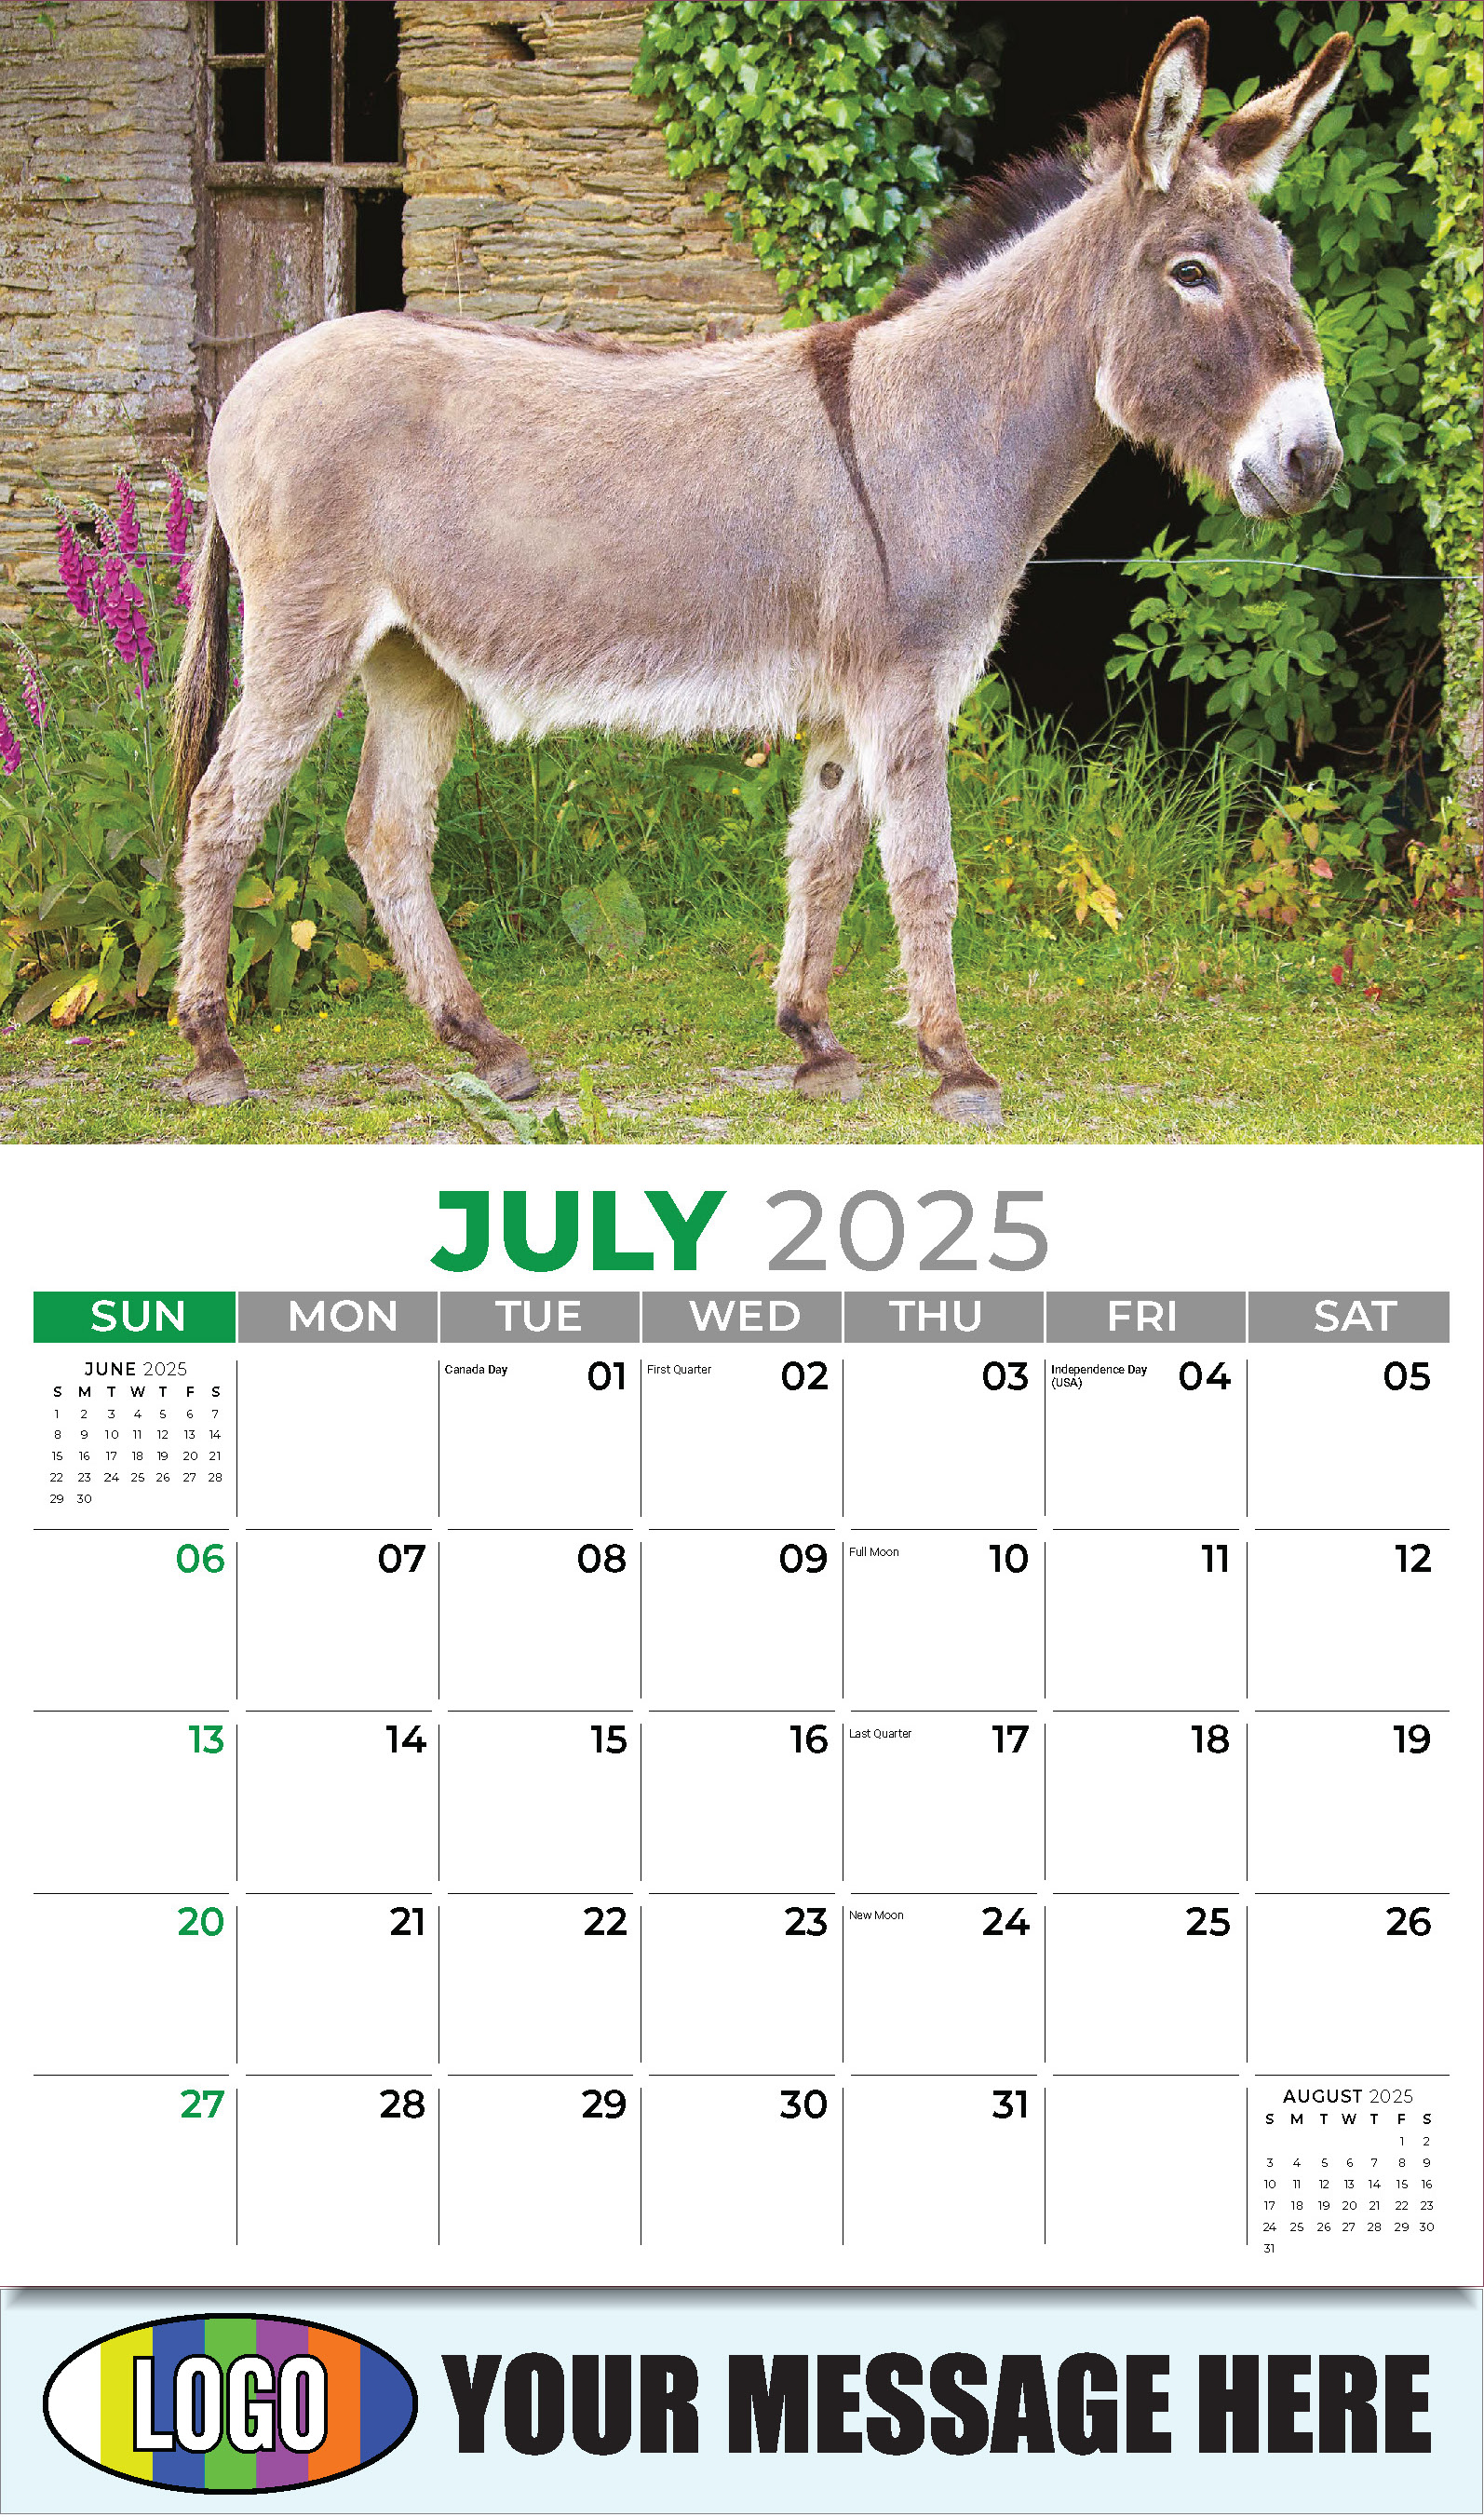 Pets 2025 Business Advertising Wall Calendar - July